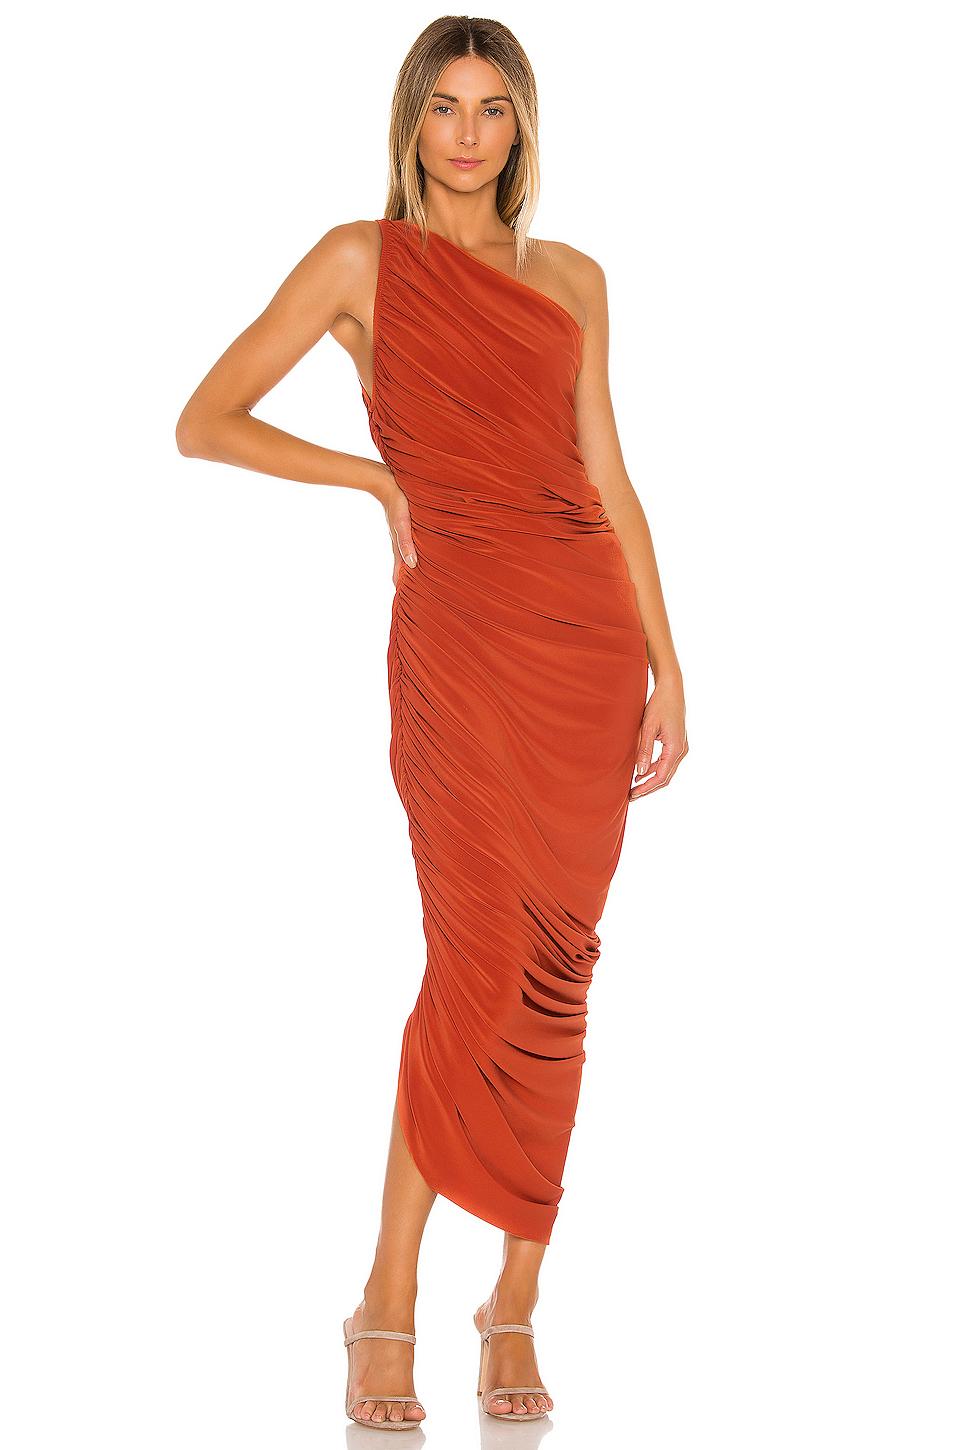 Norma Kamali Synthetic Diana Gown in Cinnamon (Orange) - Lyst